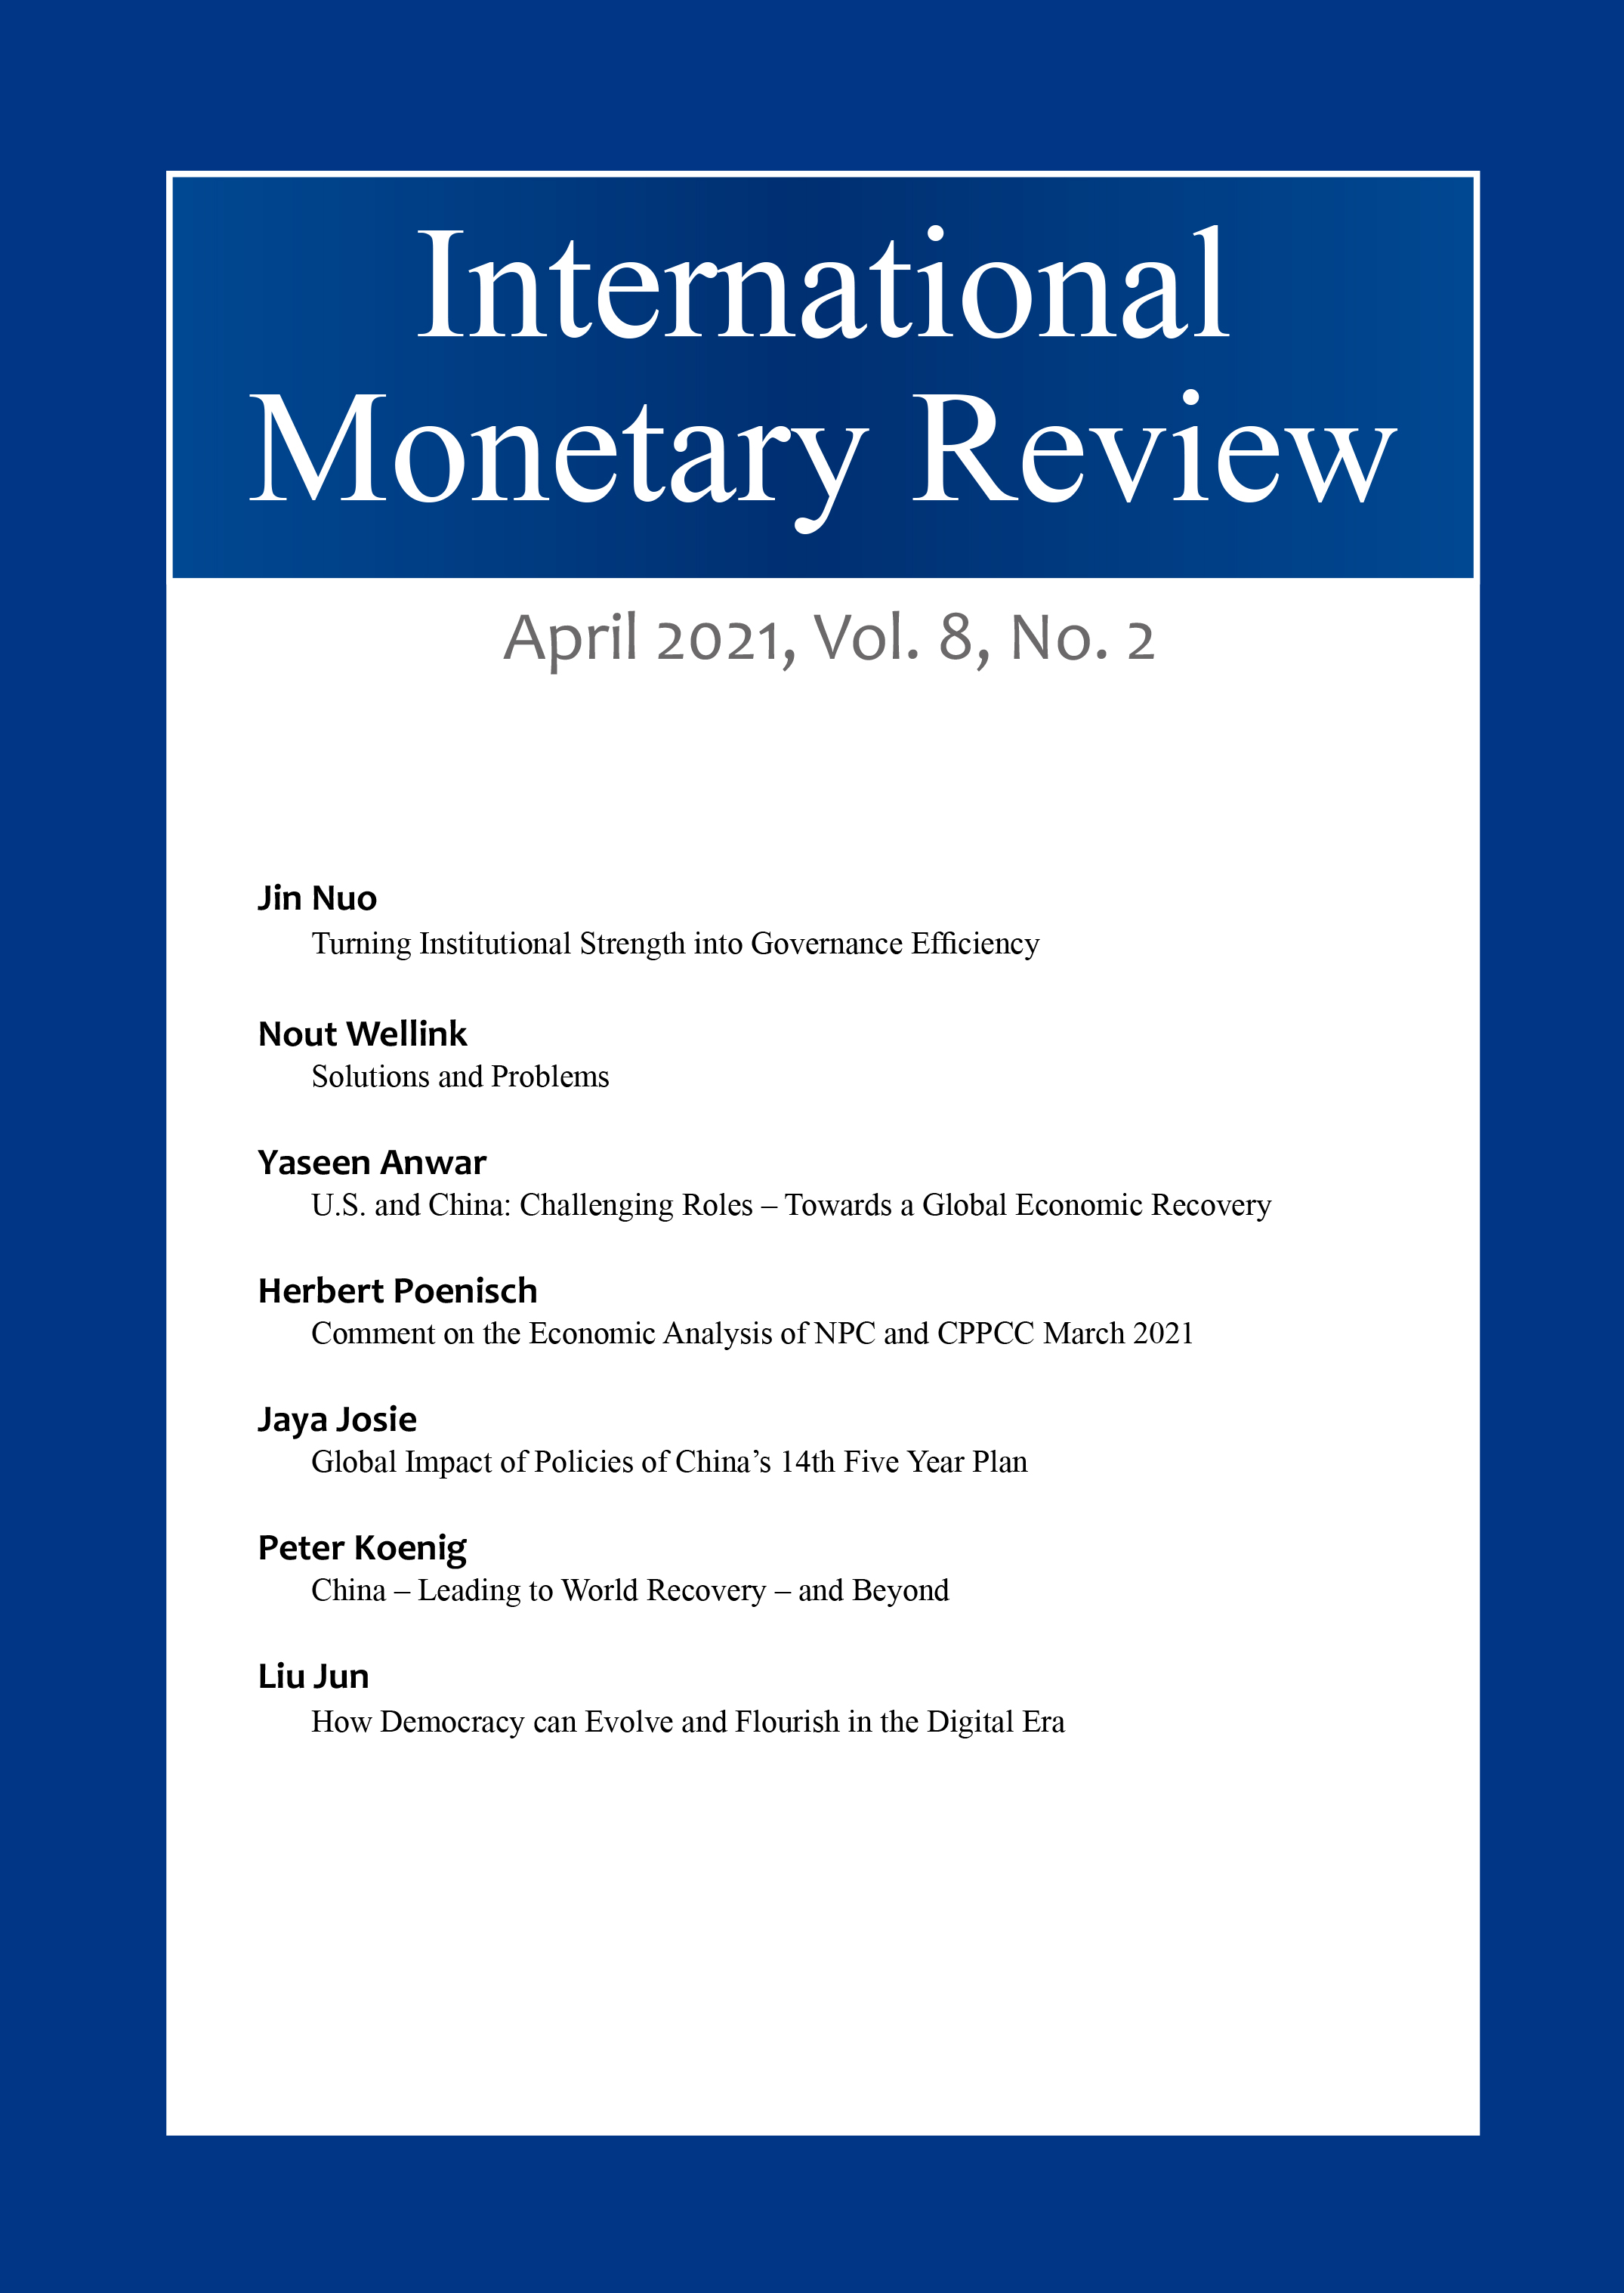 International Monetary Review, April 2021, Vol.8 No.2